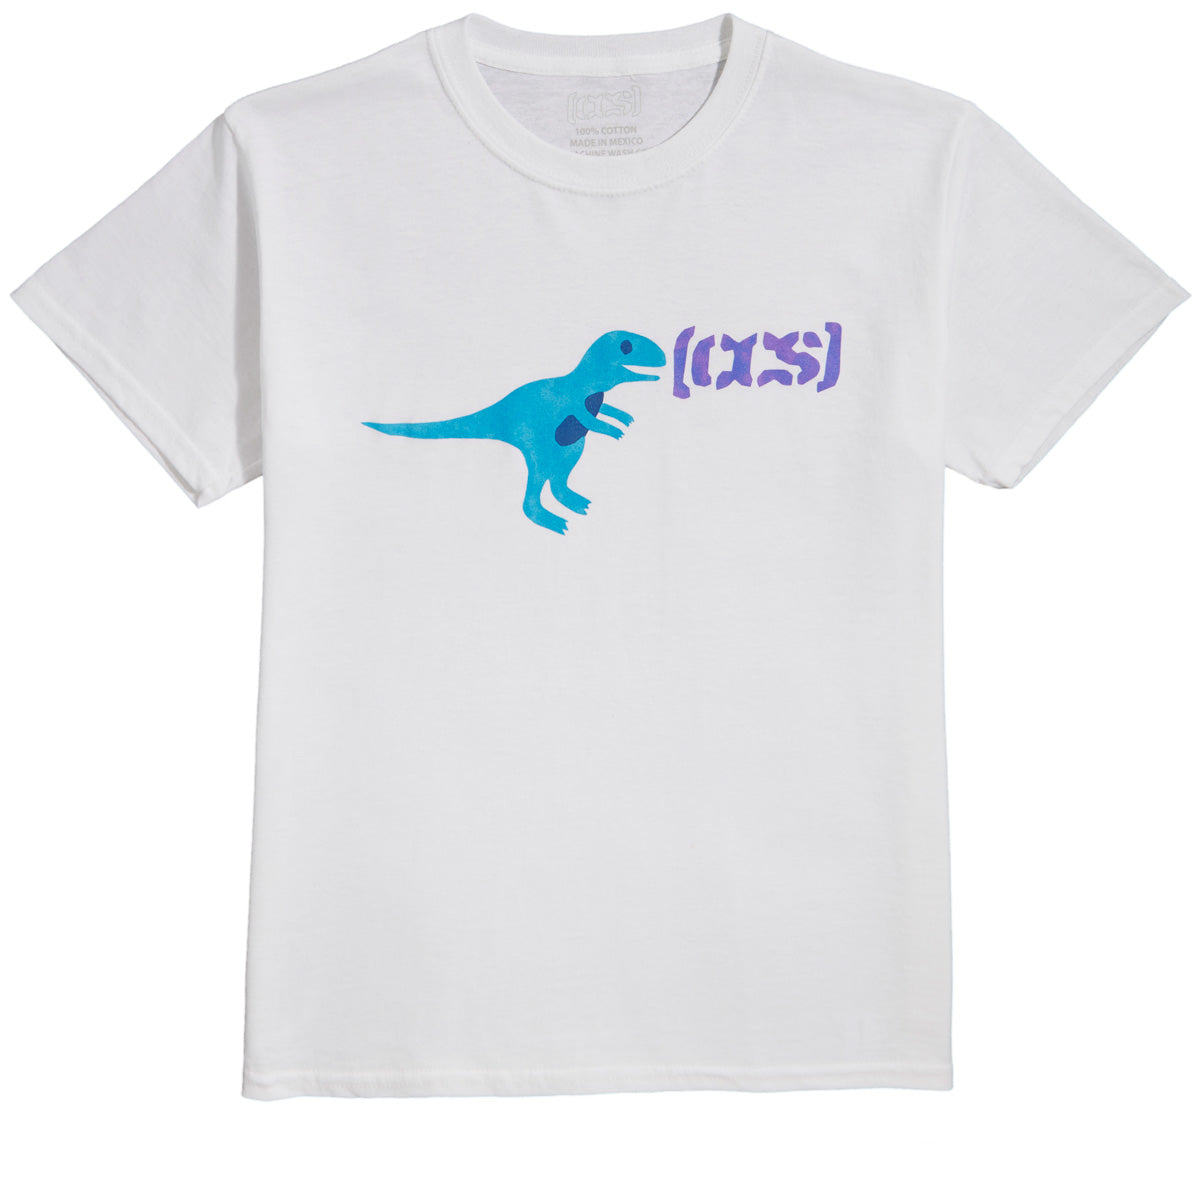 CCS Youth T-Rex T-Shirt - White image 1